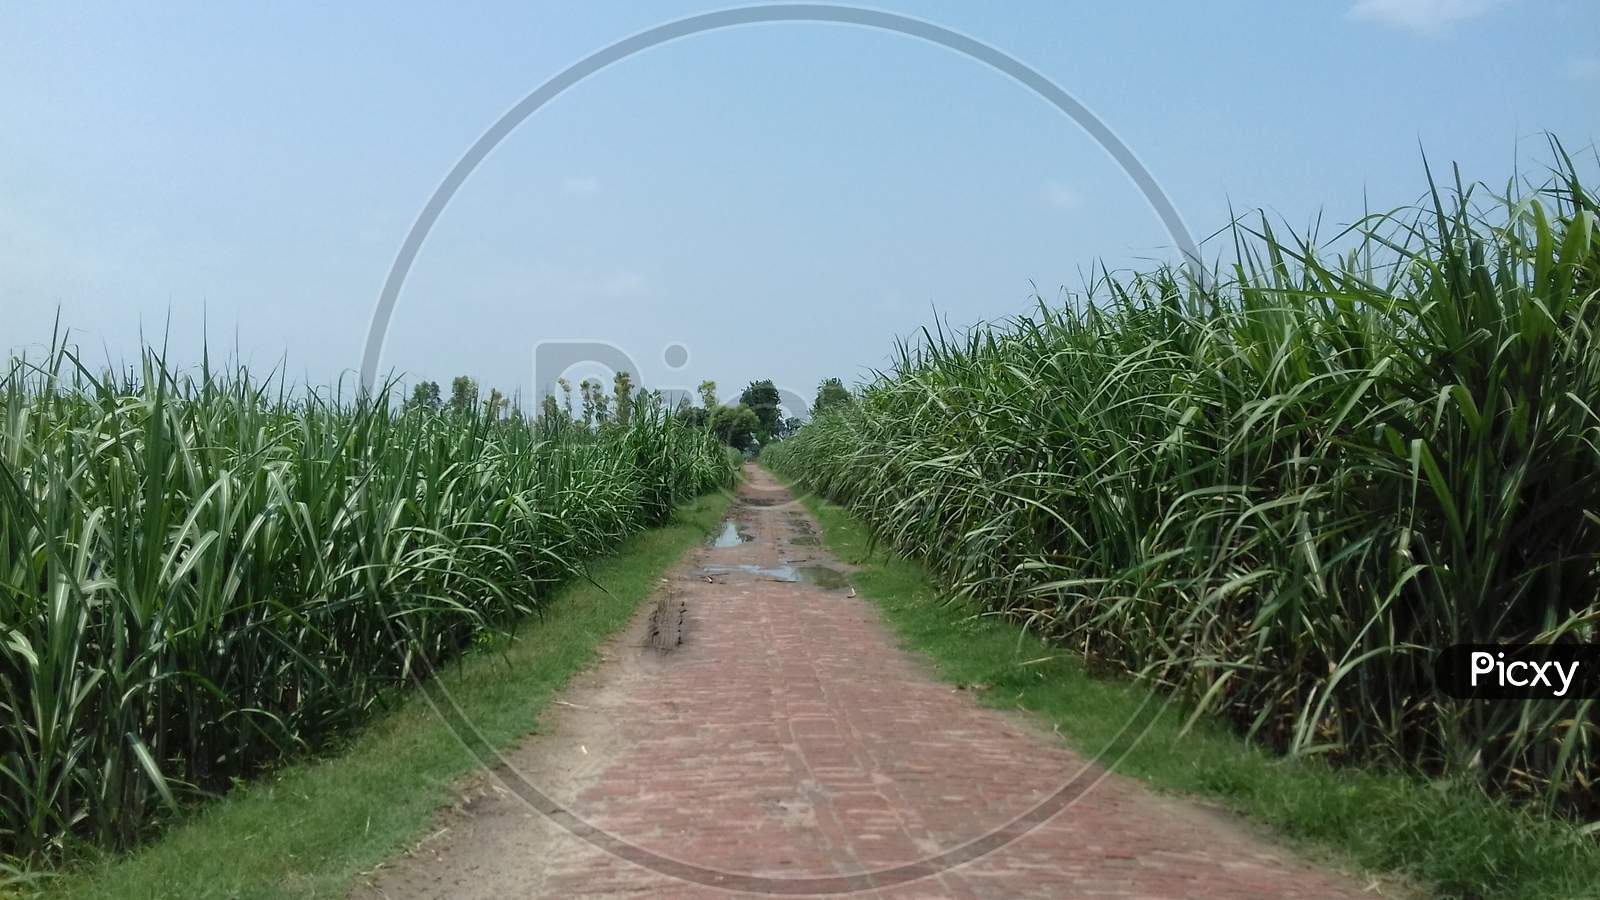 Sugarcane farms both side on the way.